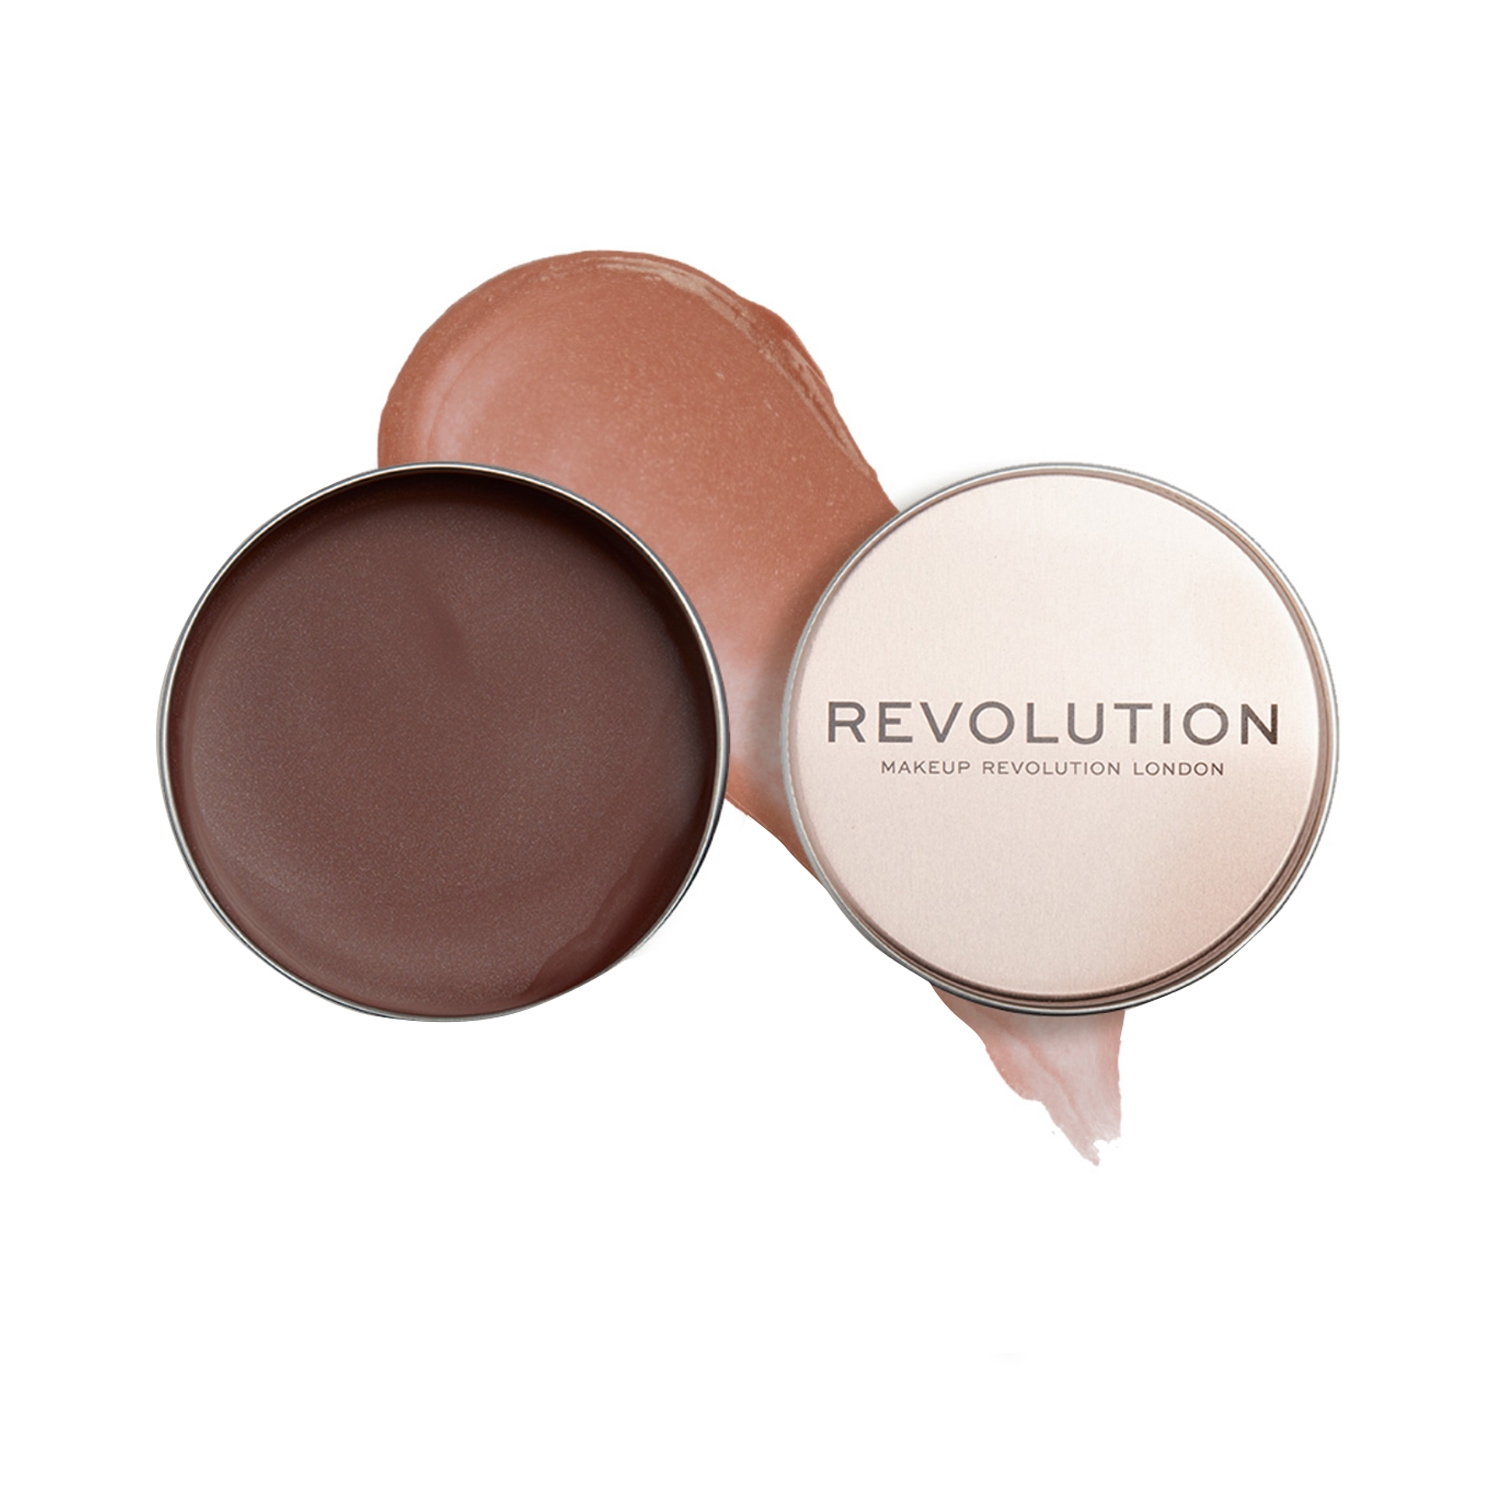 Makeup Revolution | Makeup Revolution Balm Glow Blush - Sunkissed Nude (32g)